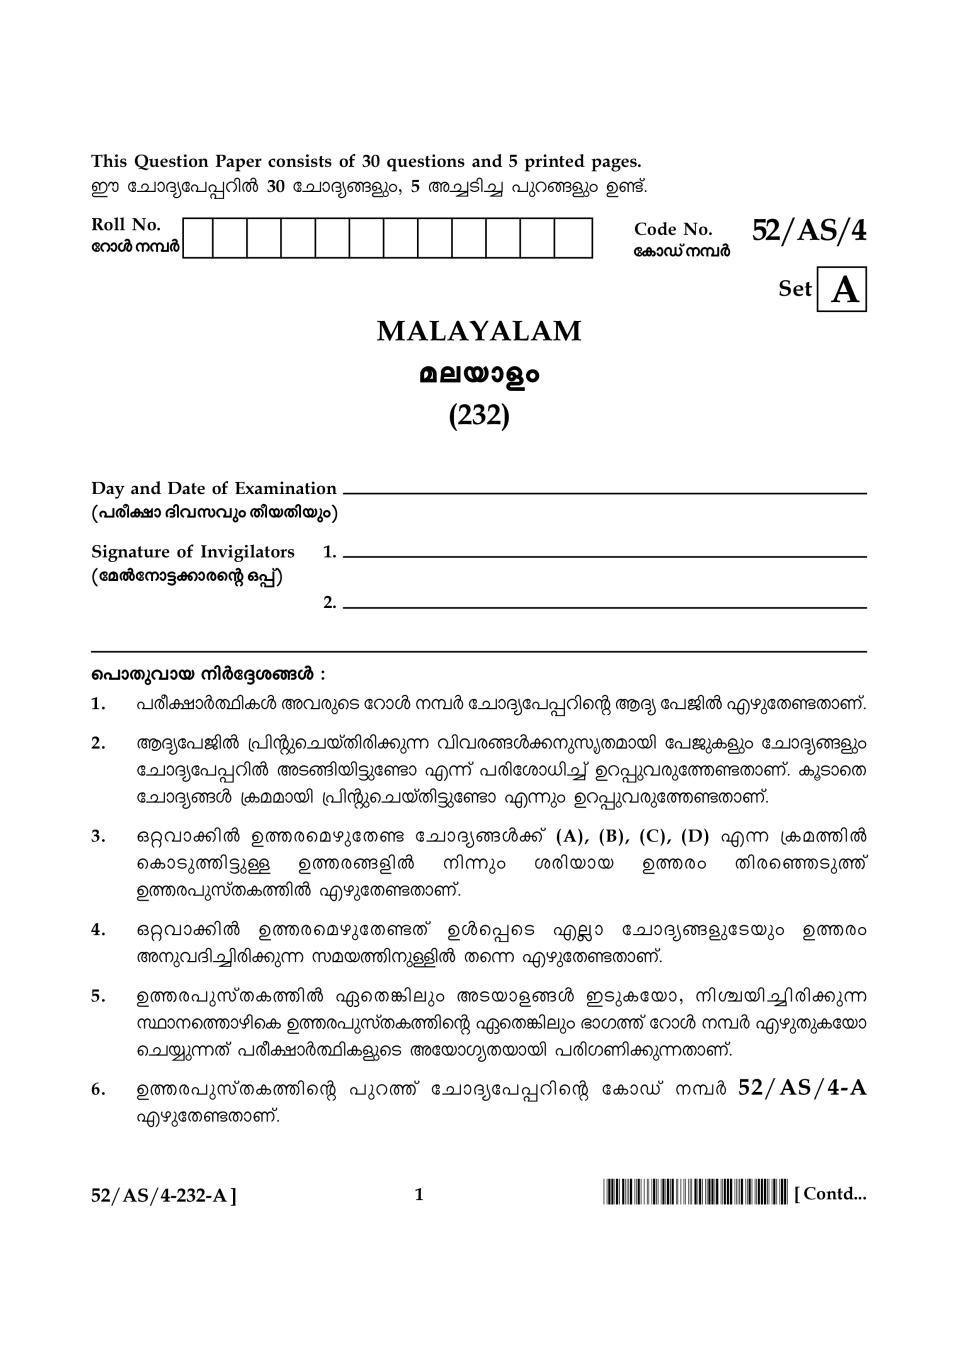 NIOS Class 10 Question Paper Apr 2016 - Malayalam - Page 1